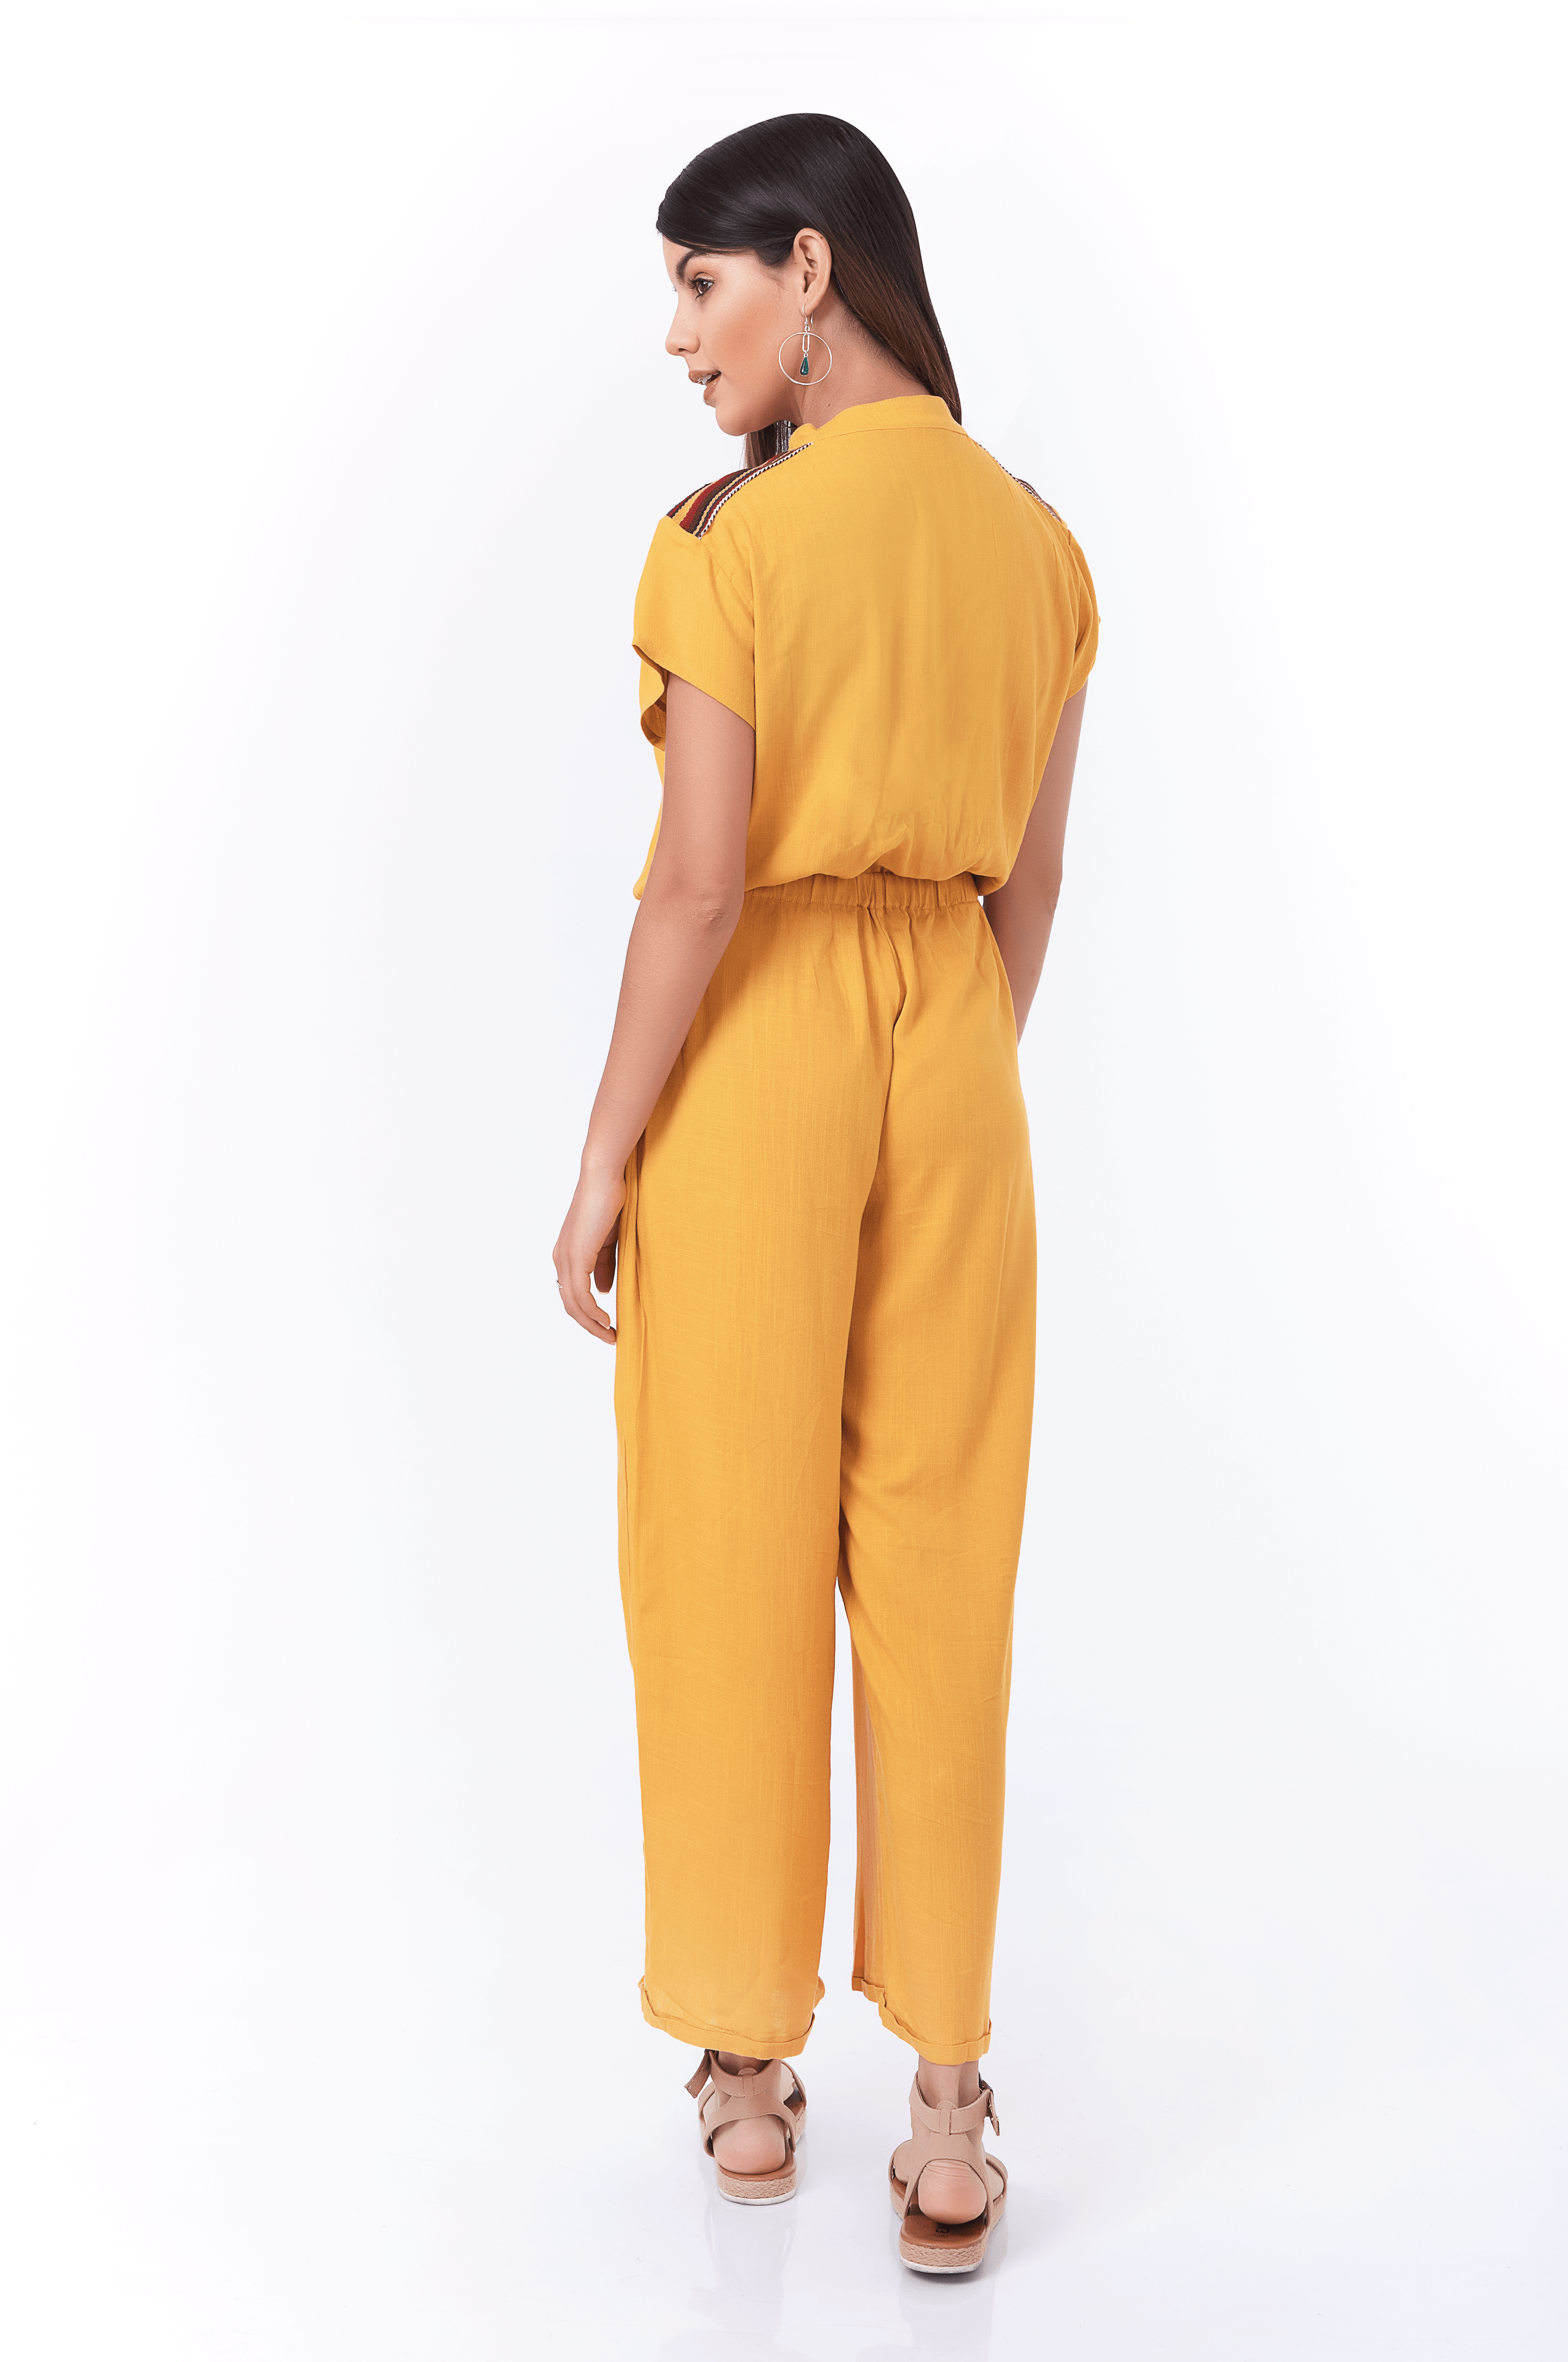 Mono amarillo  Fashion, Jumpsuit, Dress